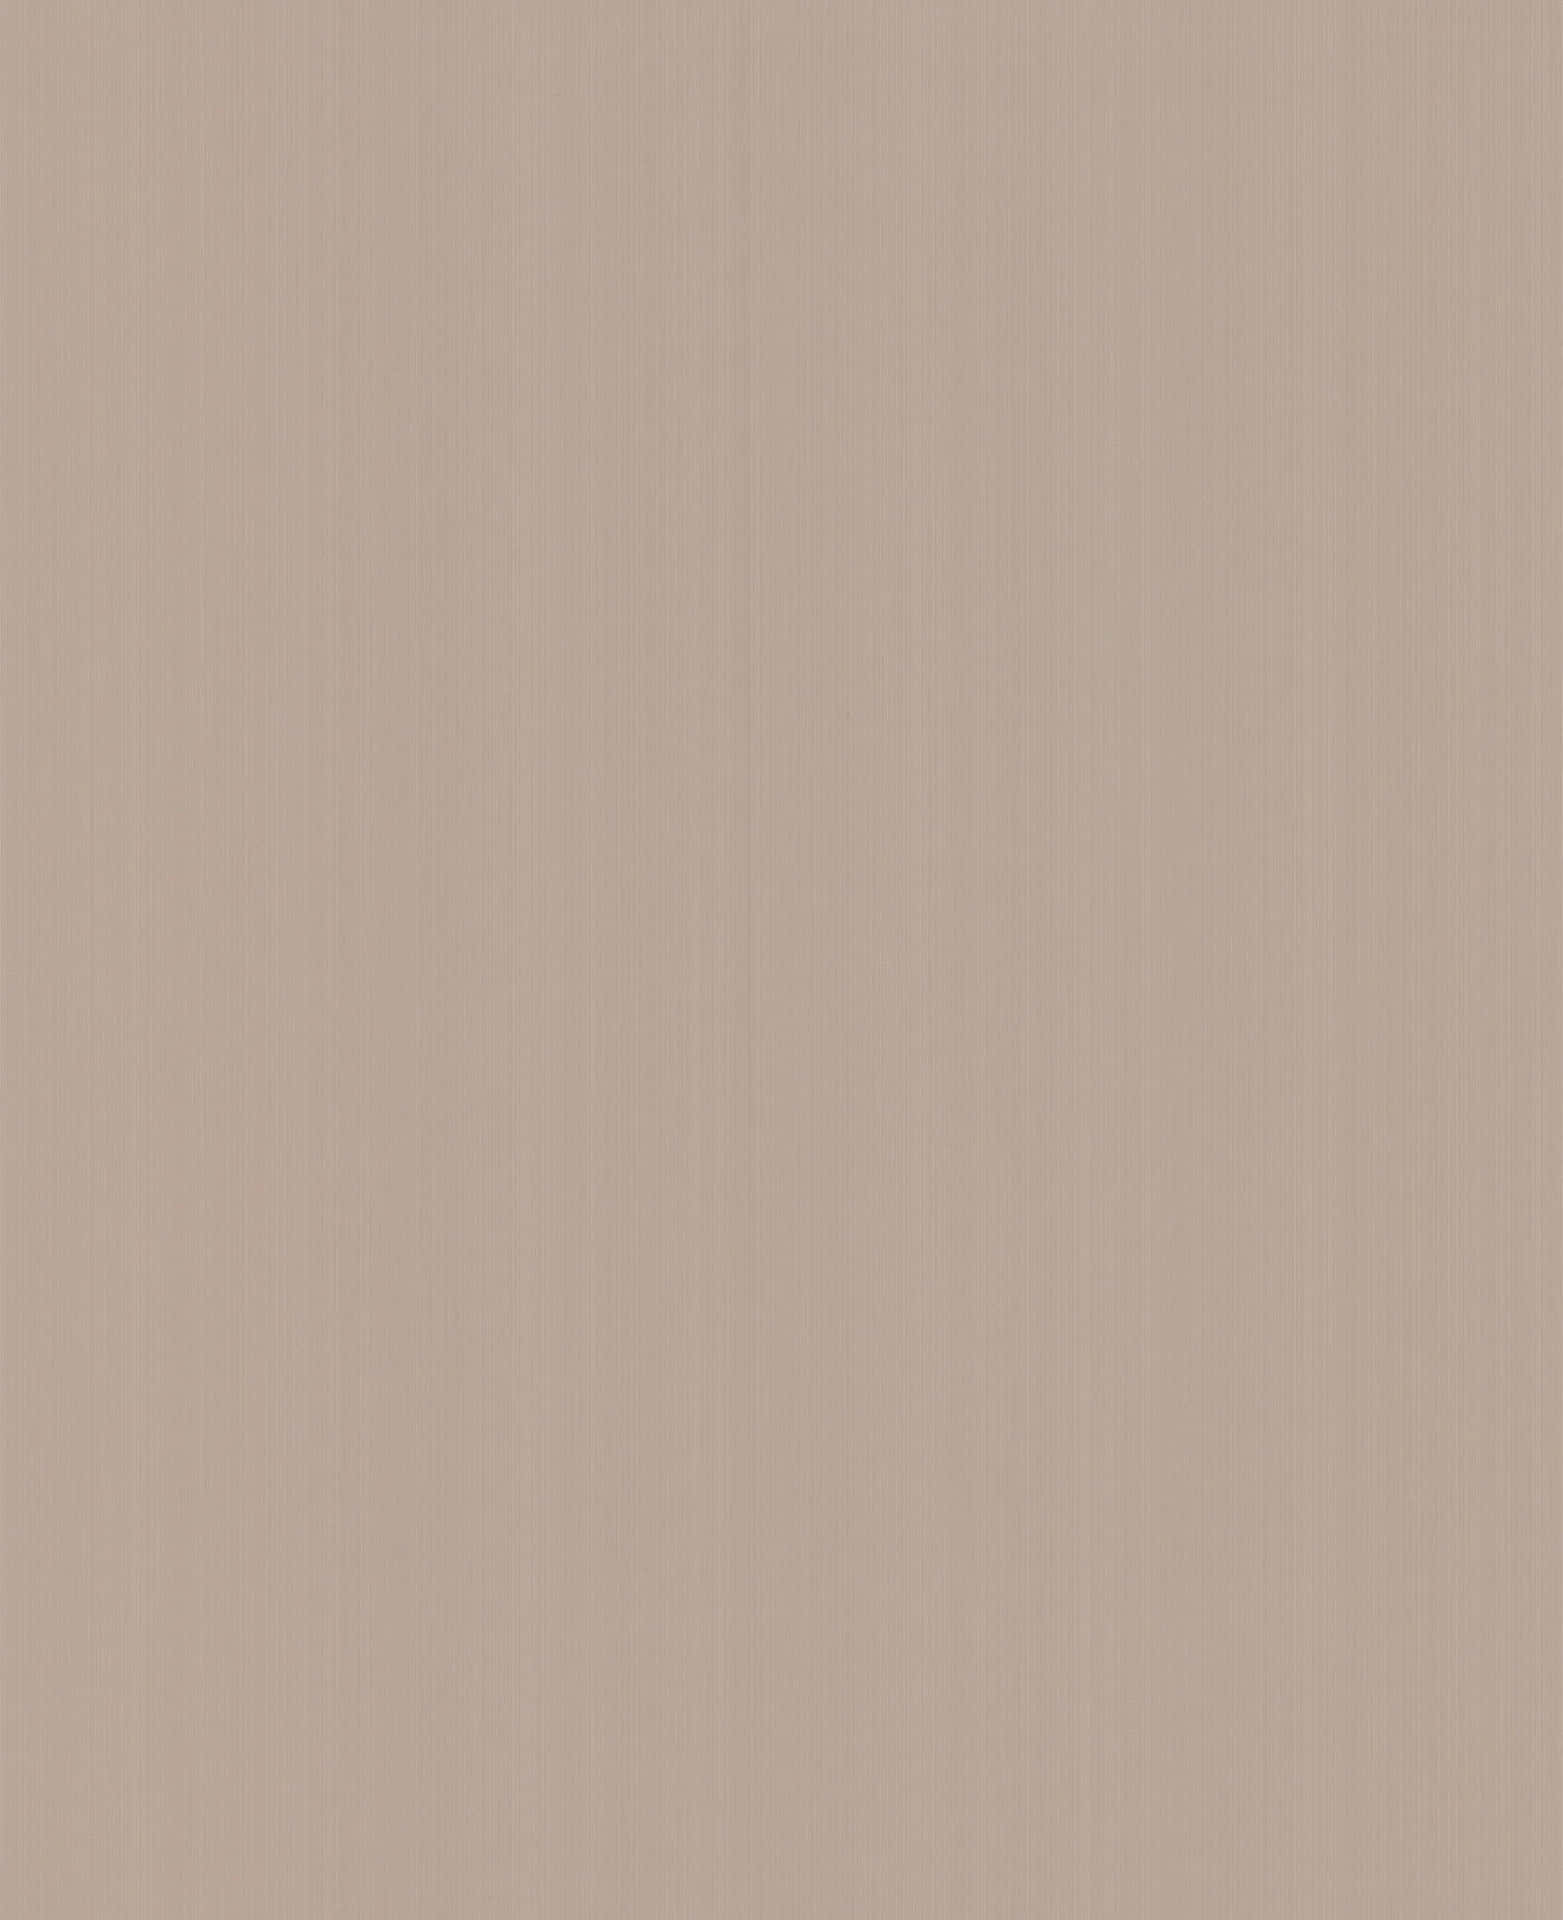 Minimalistic Light Brown Background